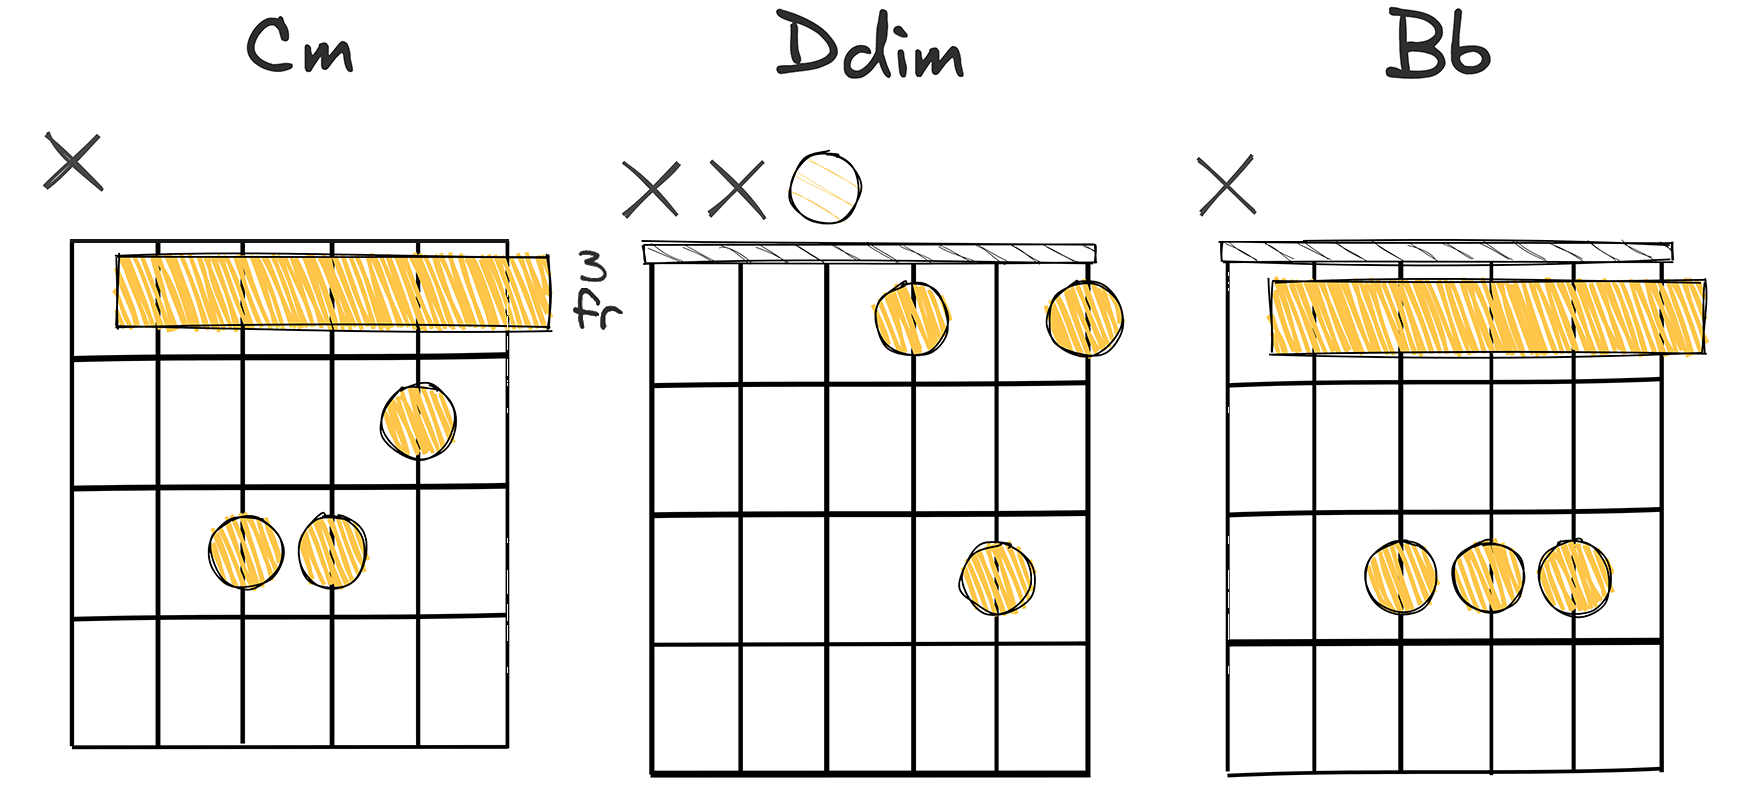 i - II - VII (1-2-7) chords diagram